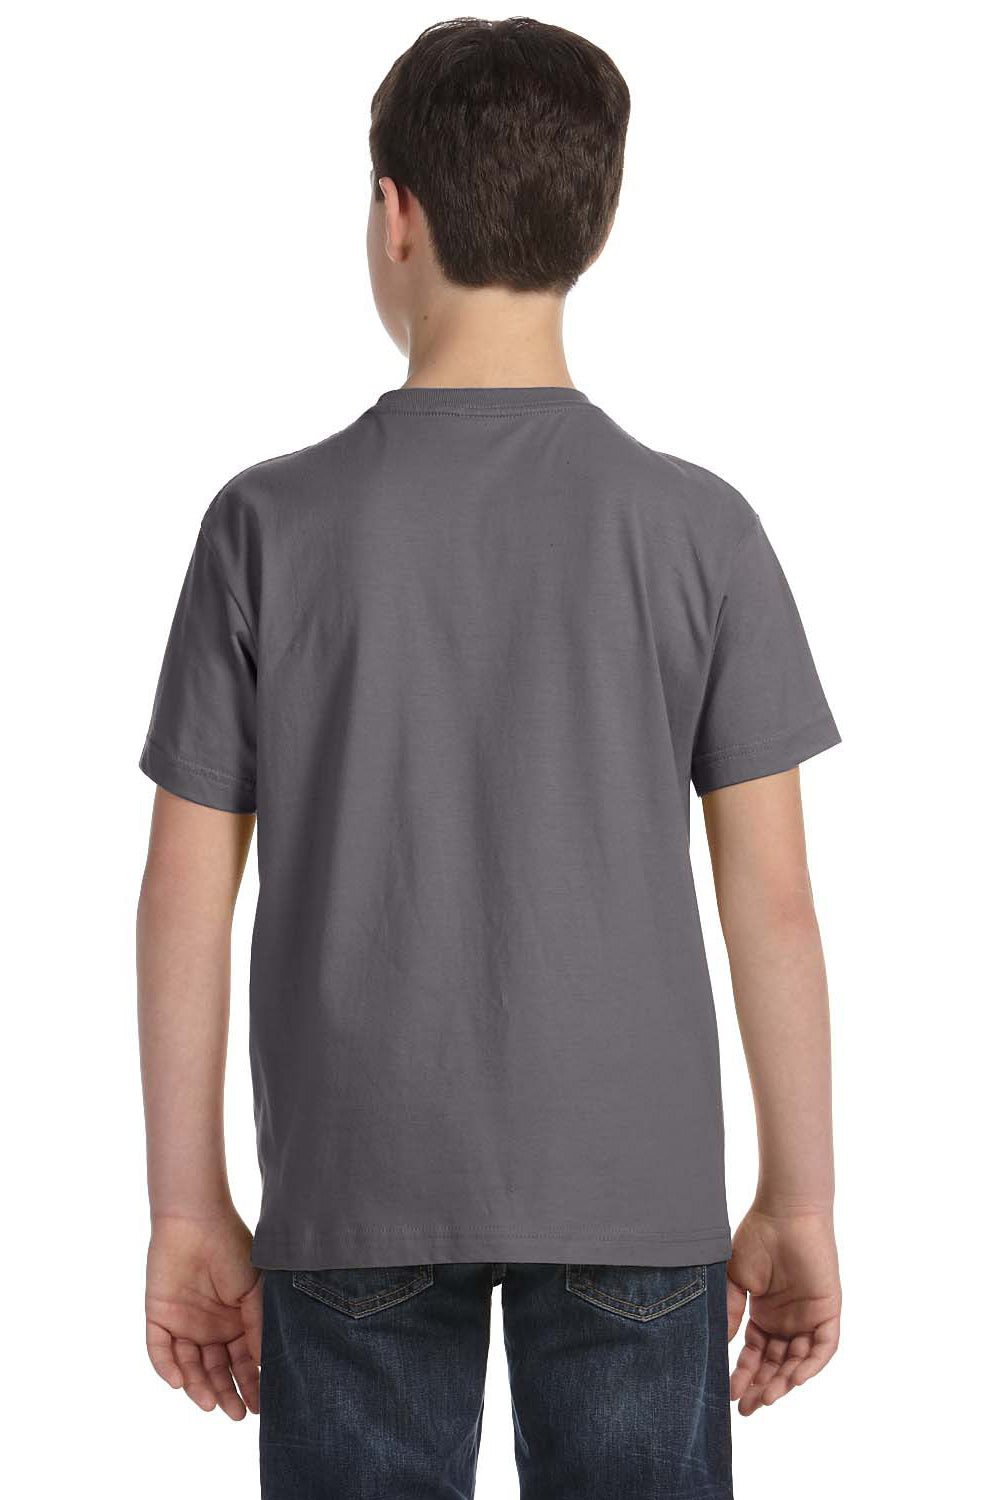 LAT 6101 Youth Fine Jersey Short Sleeve Crewneck T-Shirt Charcoal Grey Back